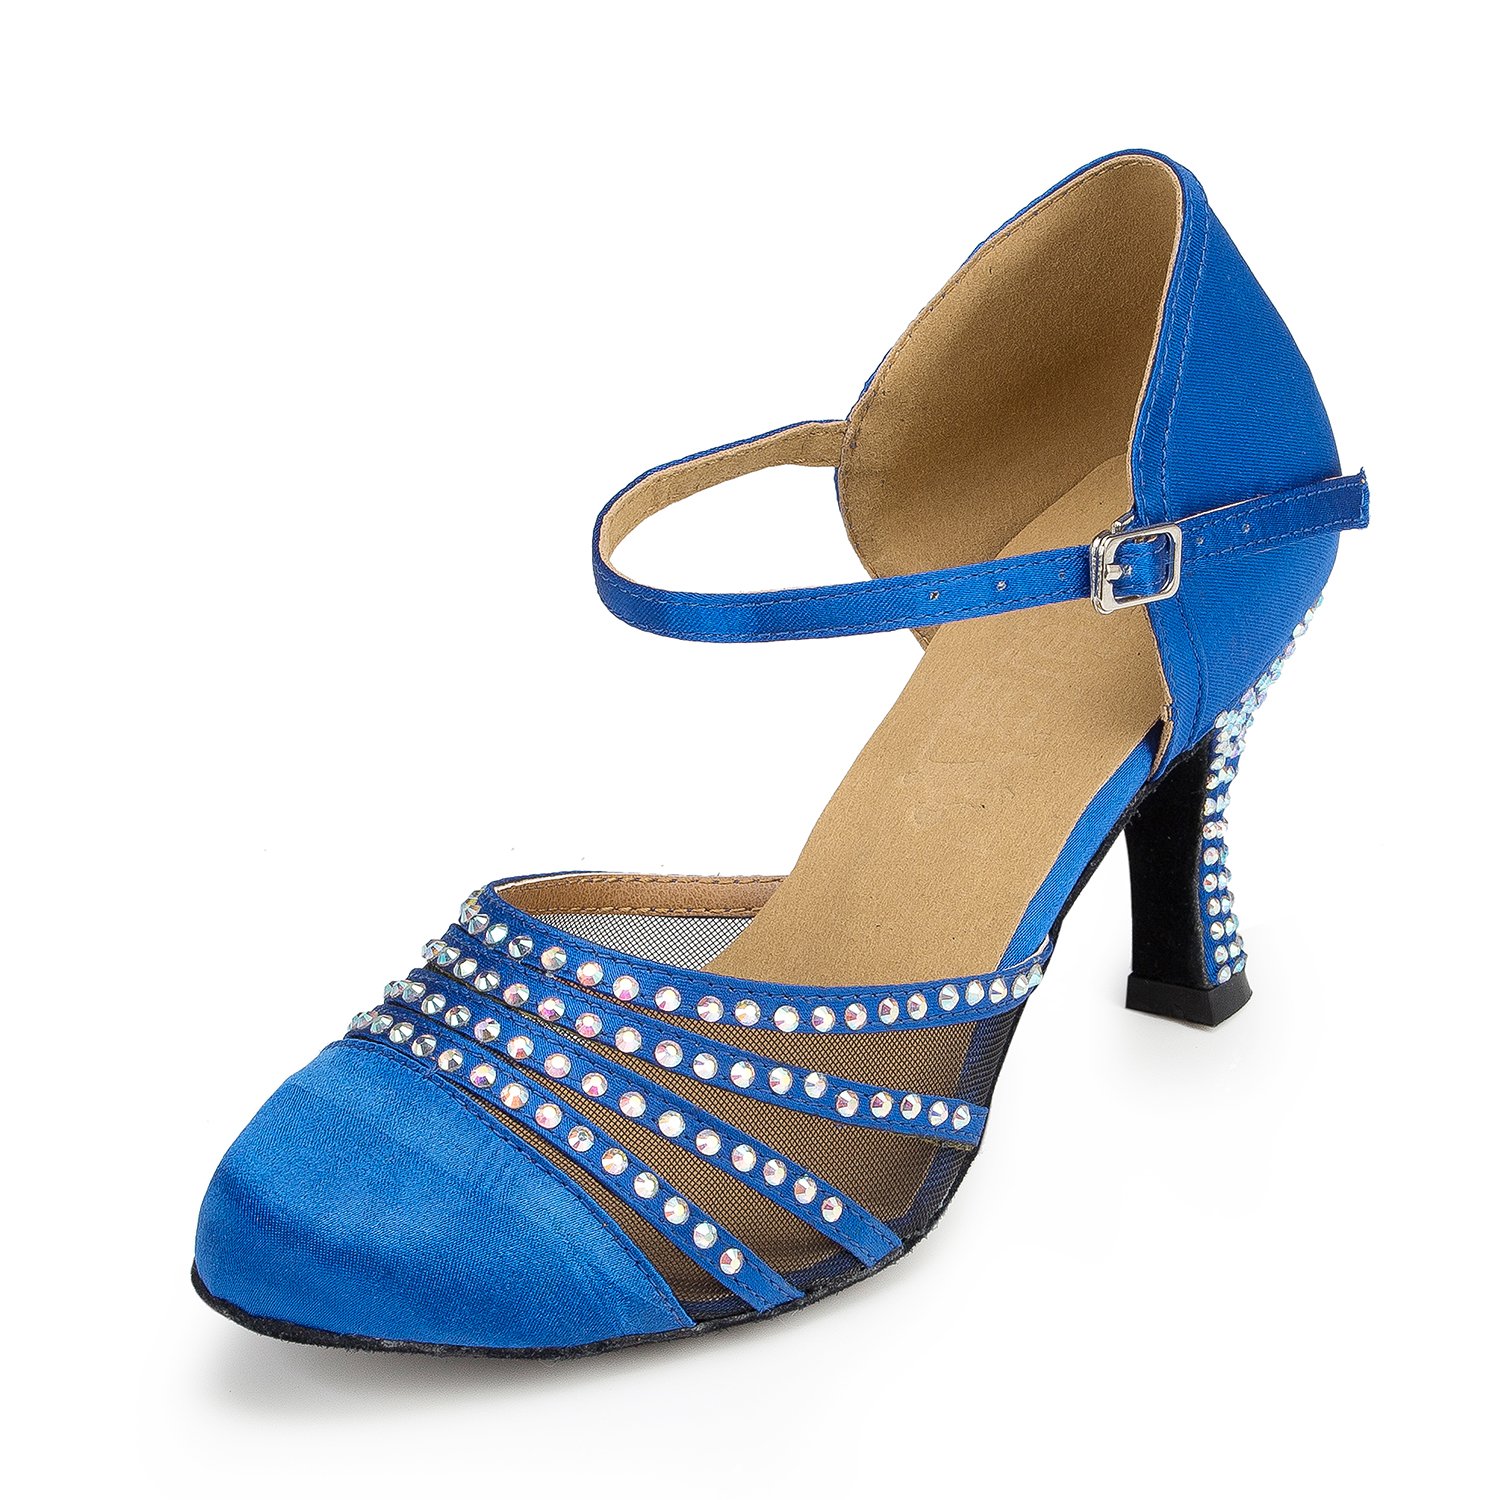 URVIP Neuheiten Frauen's Pailletten Heels Absatzschuhe Moderne Latein-Schuhe mit Knöchelriemen Tanzschuhe LD036 Blau 38 EU